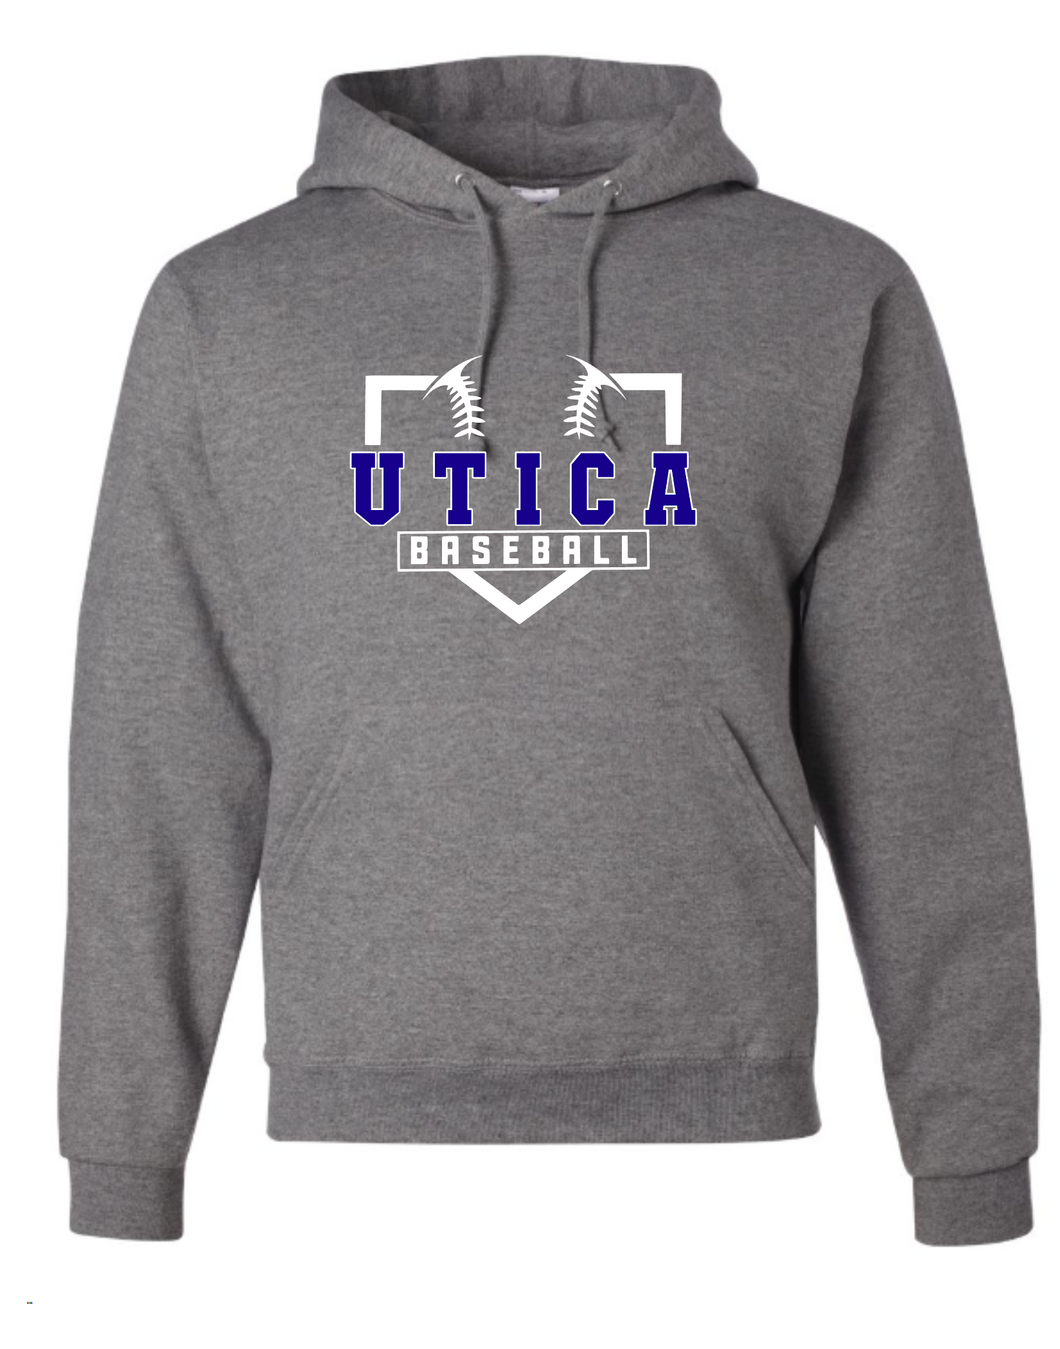 Utica baseball hoodie